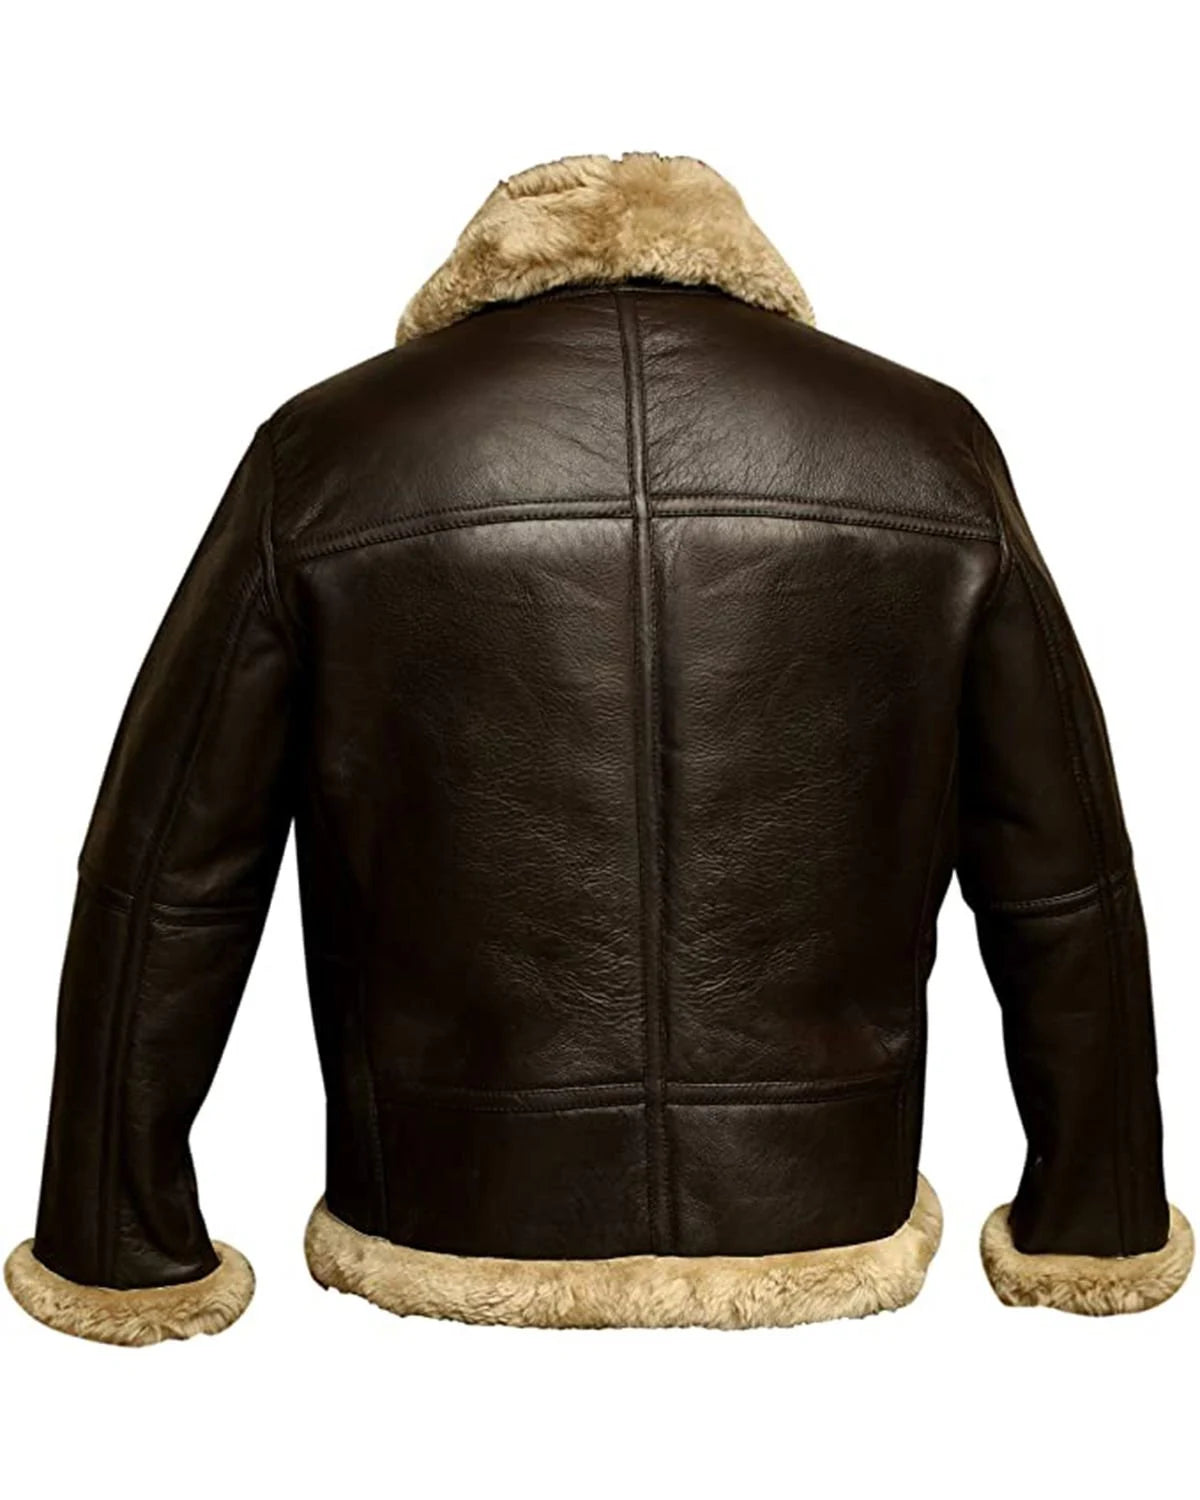 warm winter jacket men raf 3 jackets men aviator jacket men bomber leather jacket fur jackets leather jackets men shearling jackets men genuine leather jackets men valentines day gift for men